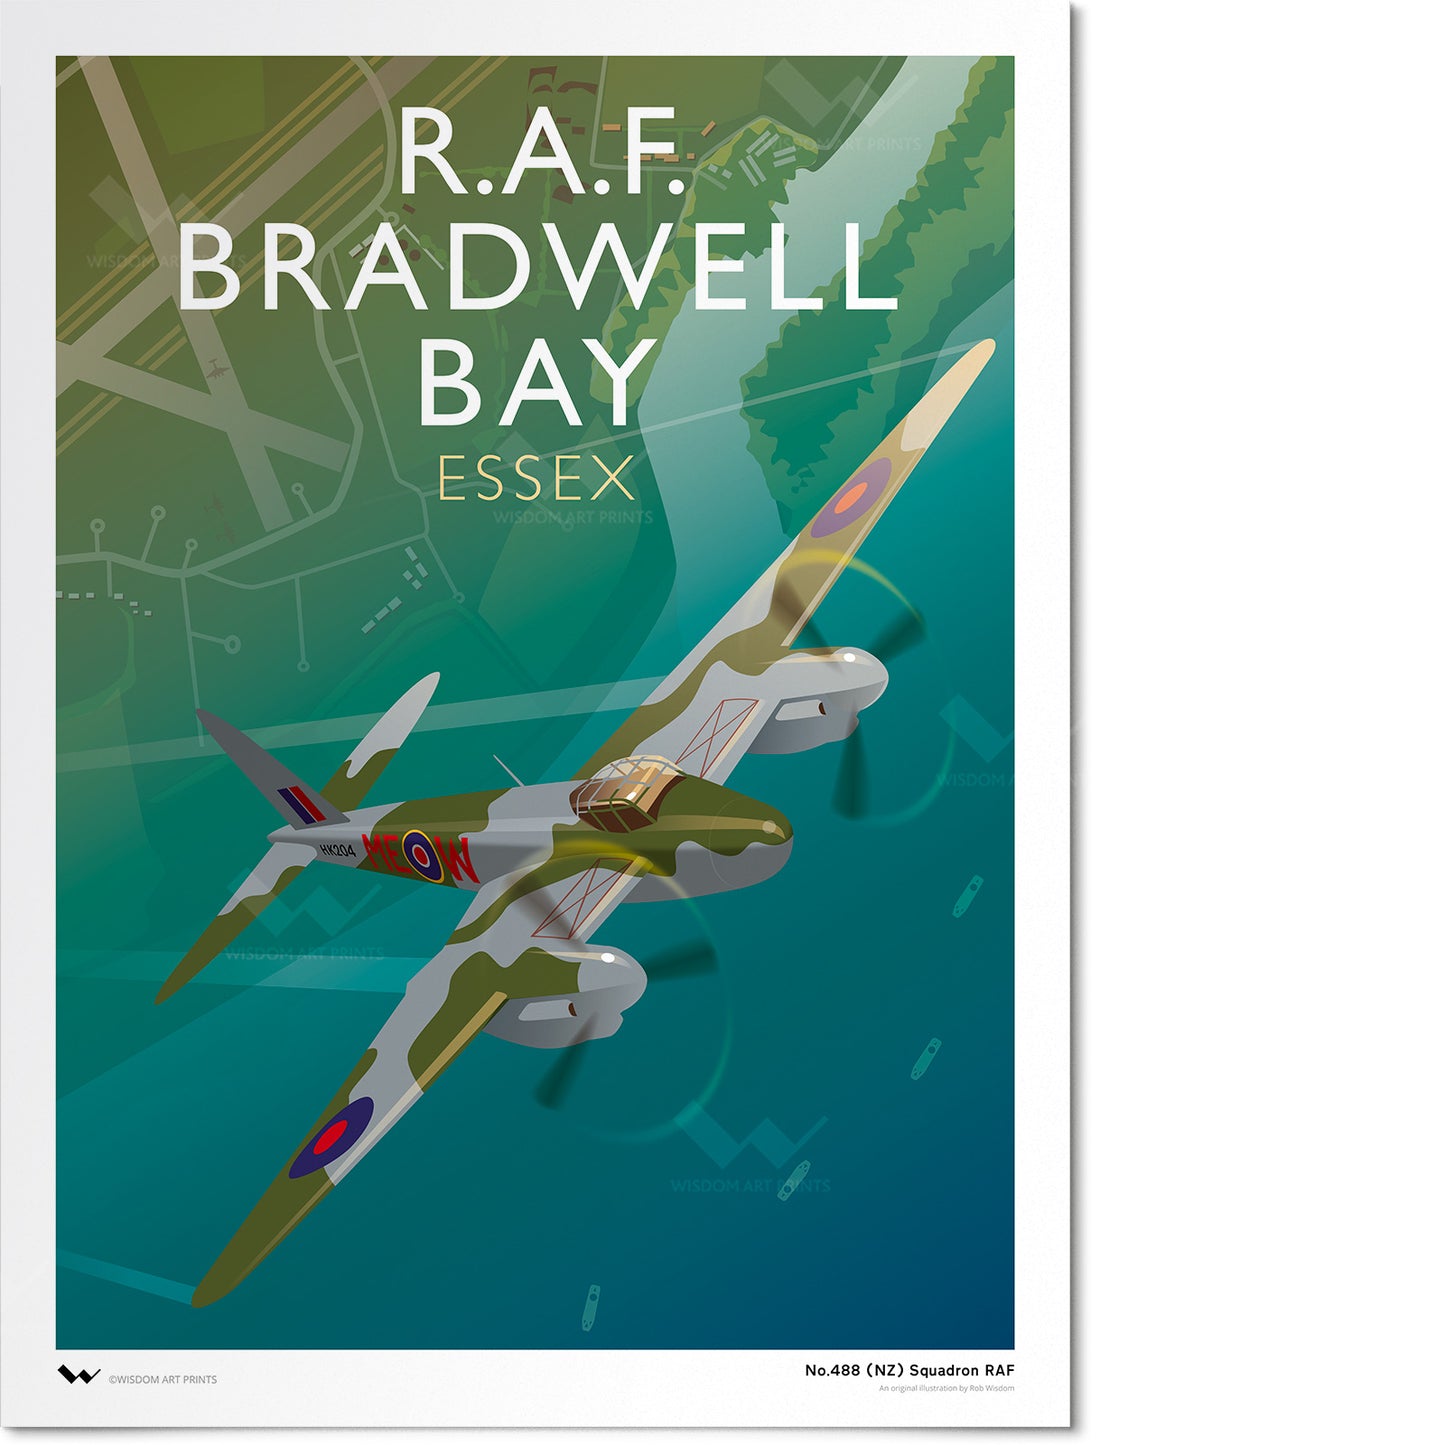 Illustration of RAF Bradwell Bay, featuring a De Havilland Mosquito